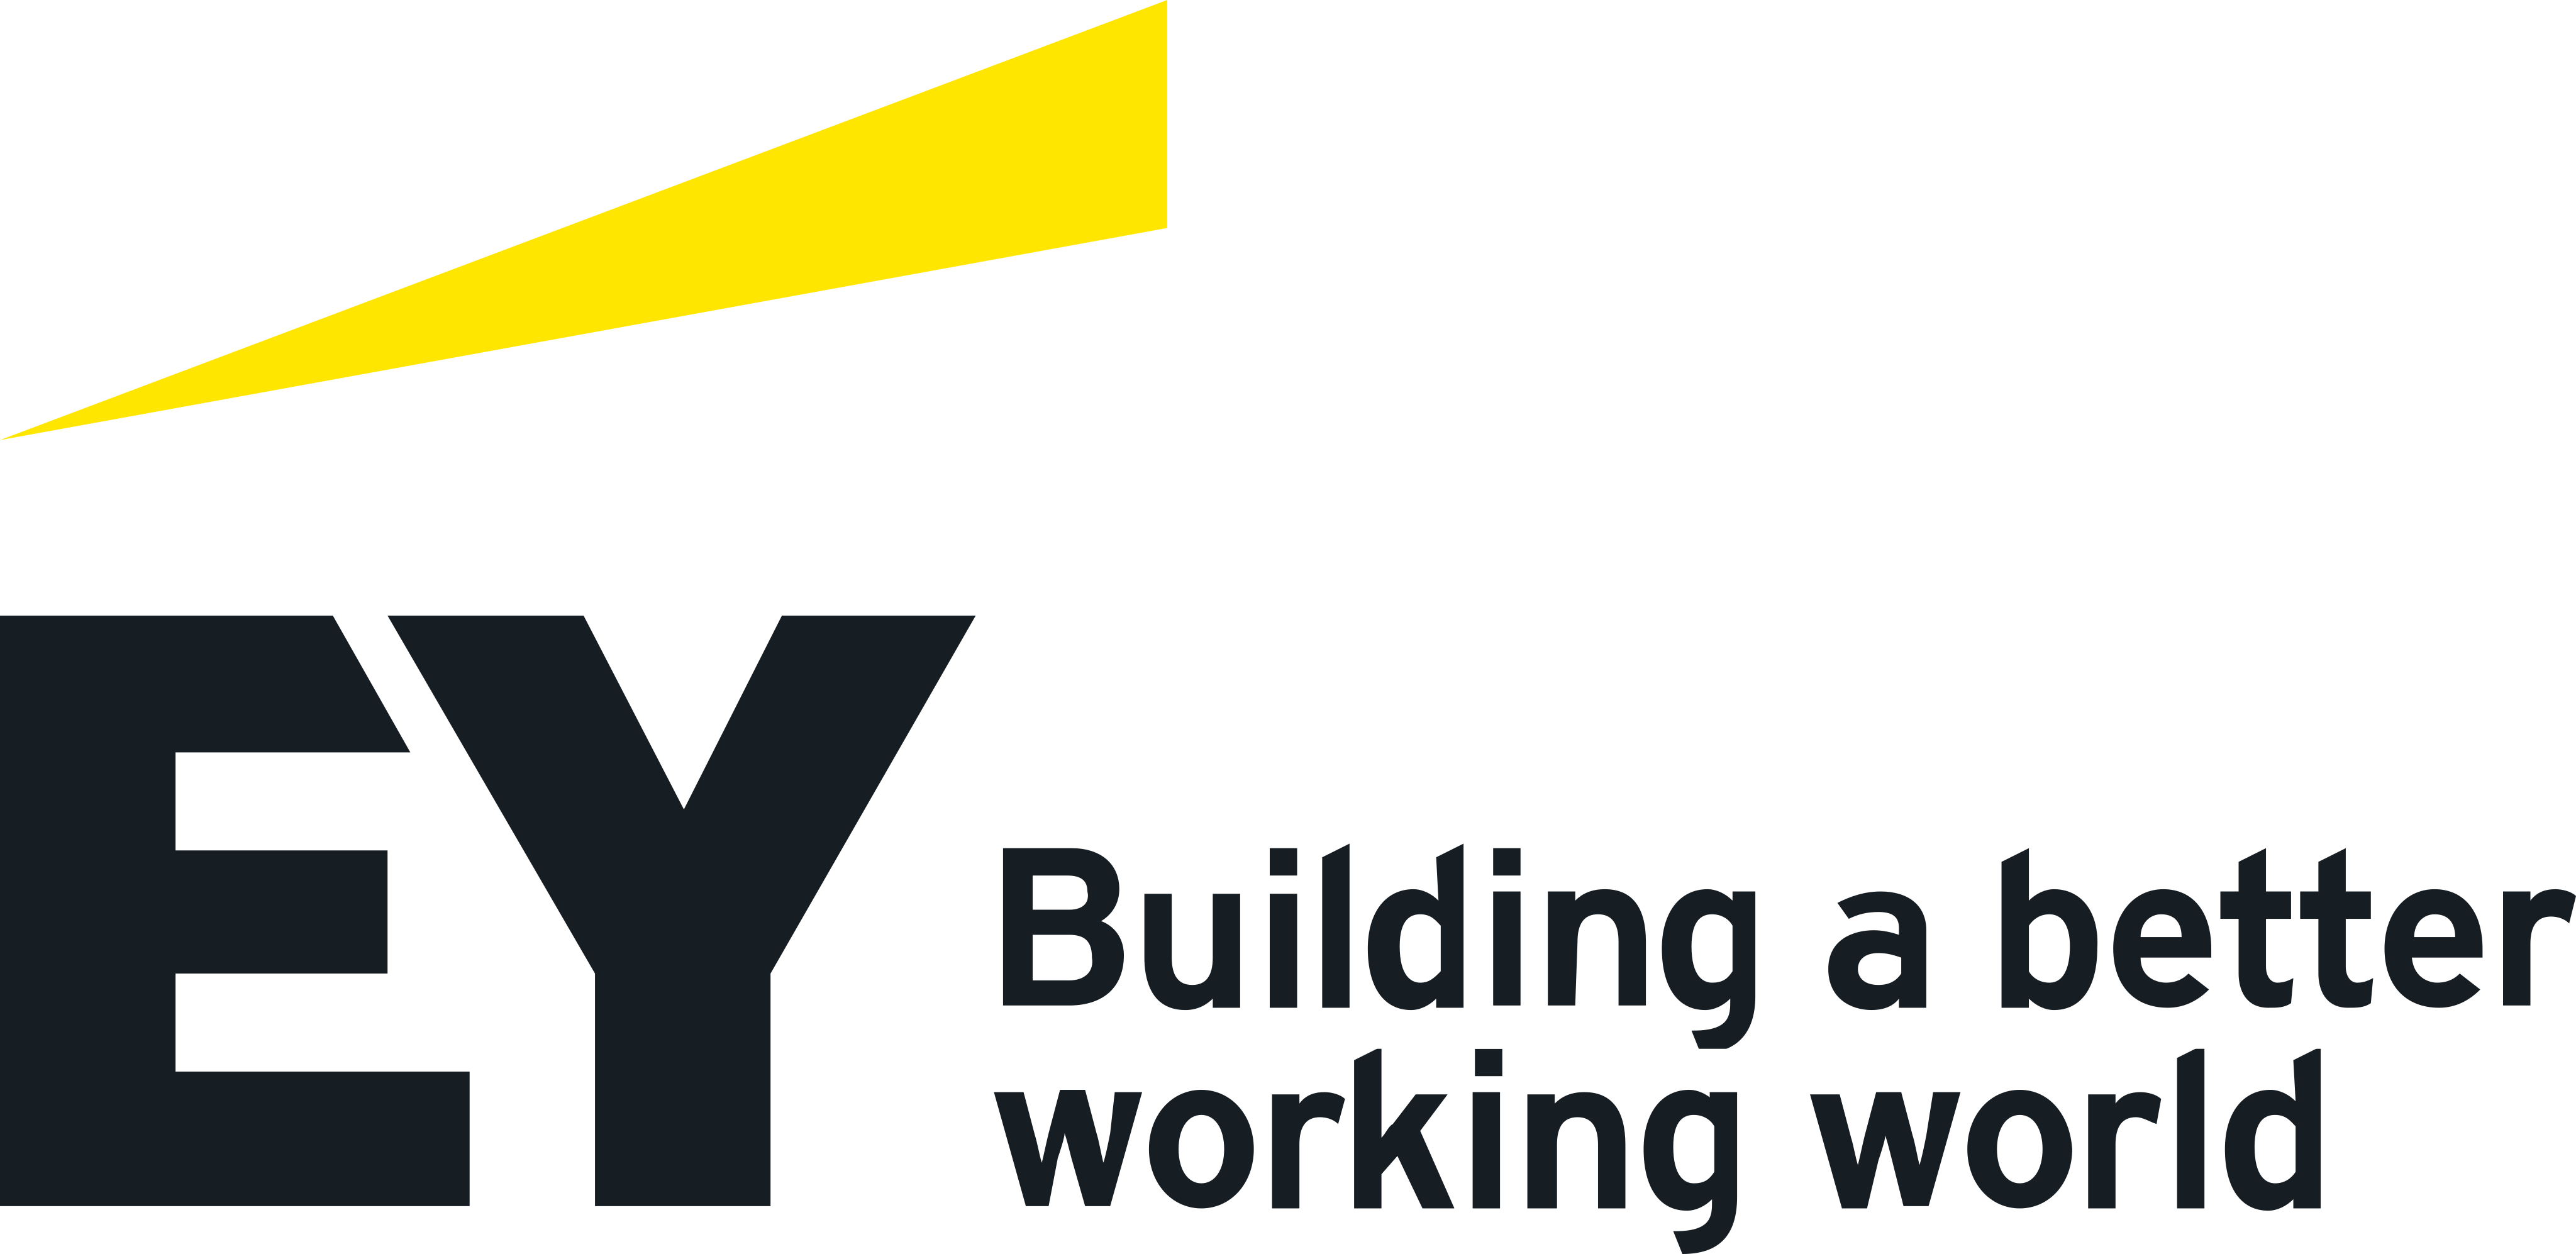 ernst-young-EY-logo | GeoMarvel